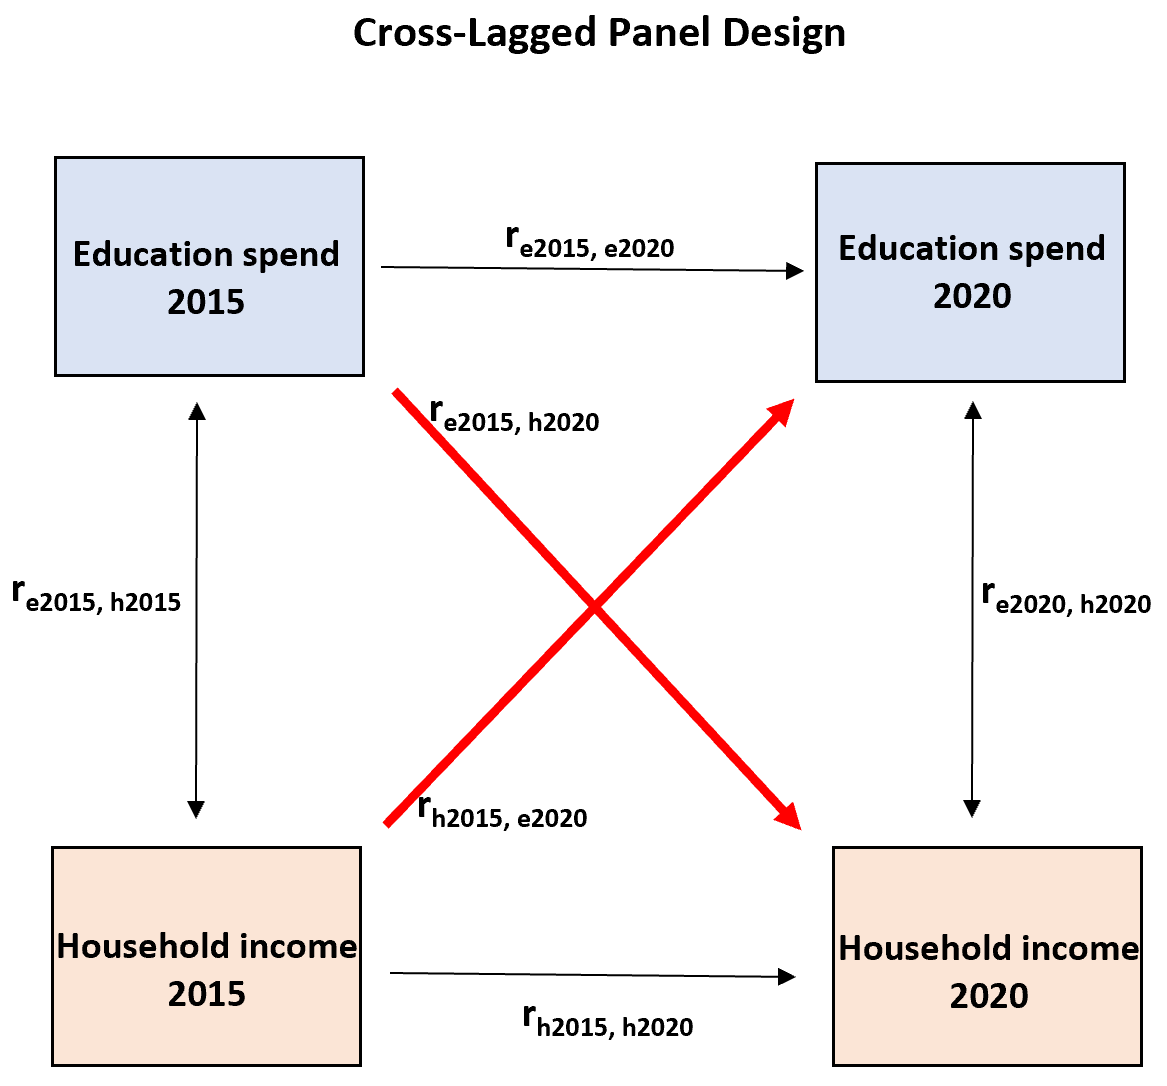 Cross-lagged panel model